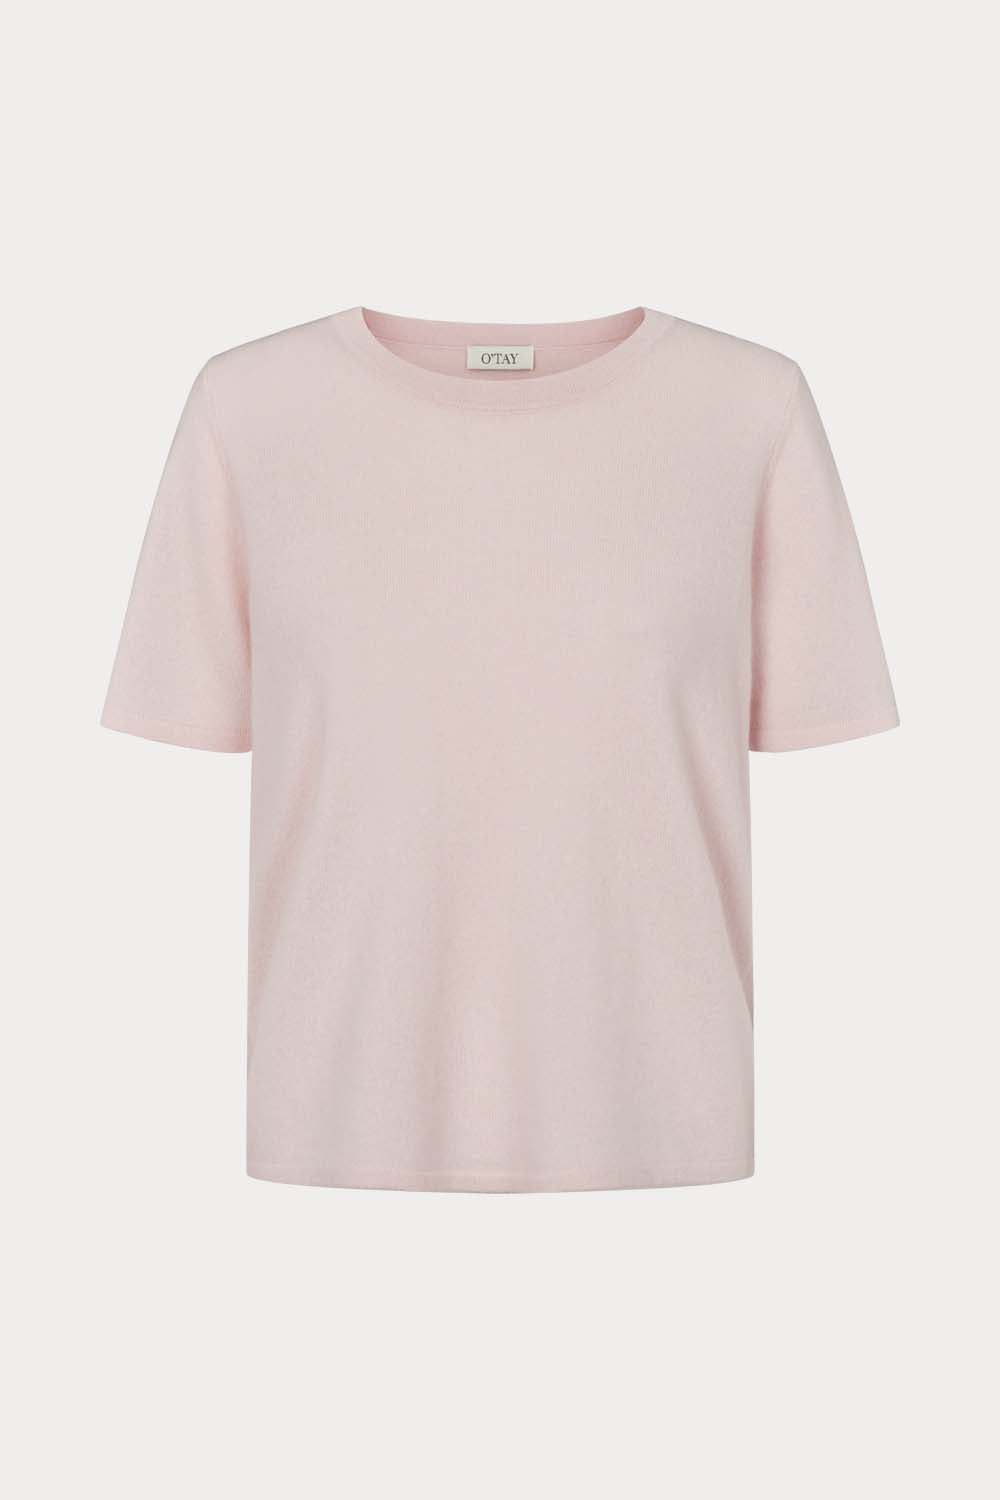 O'TAY Cassie T-Shirt T-Shirts Light Rose